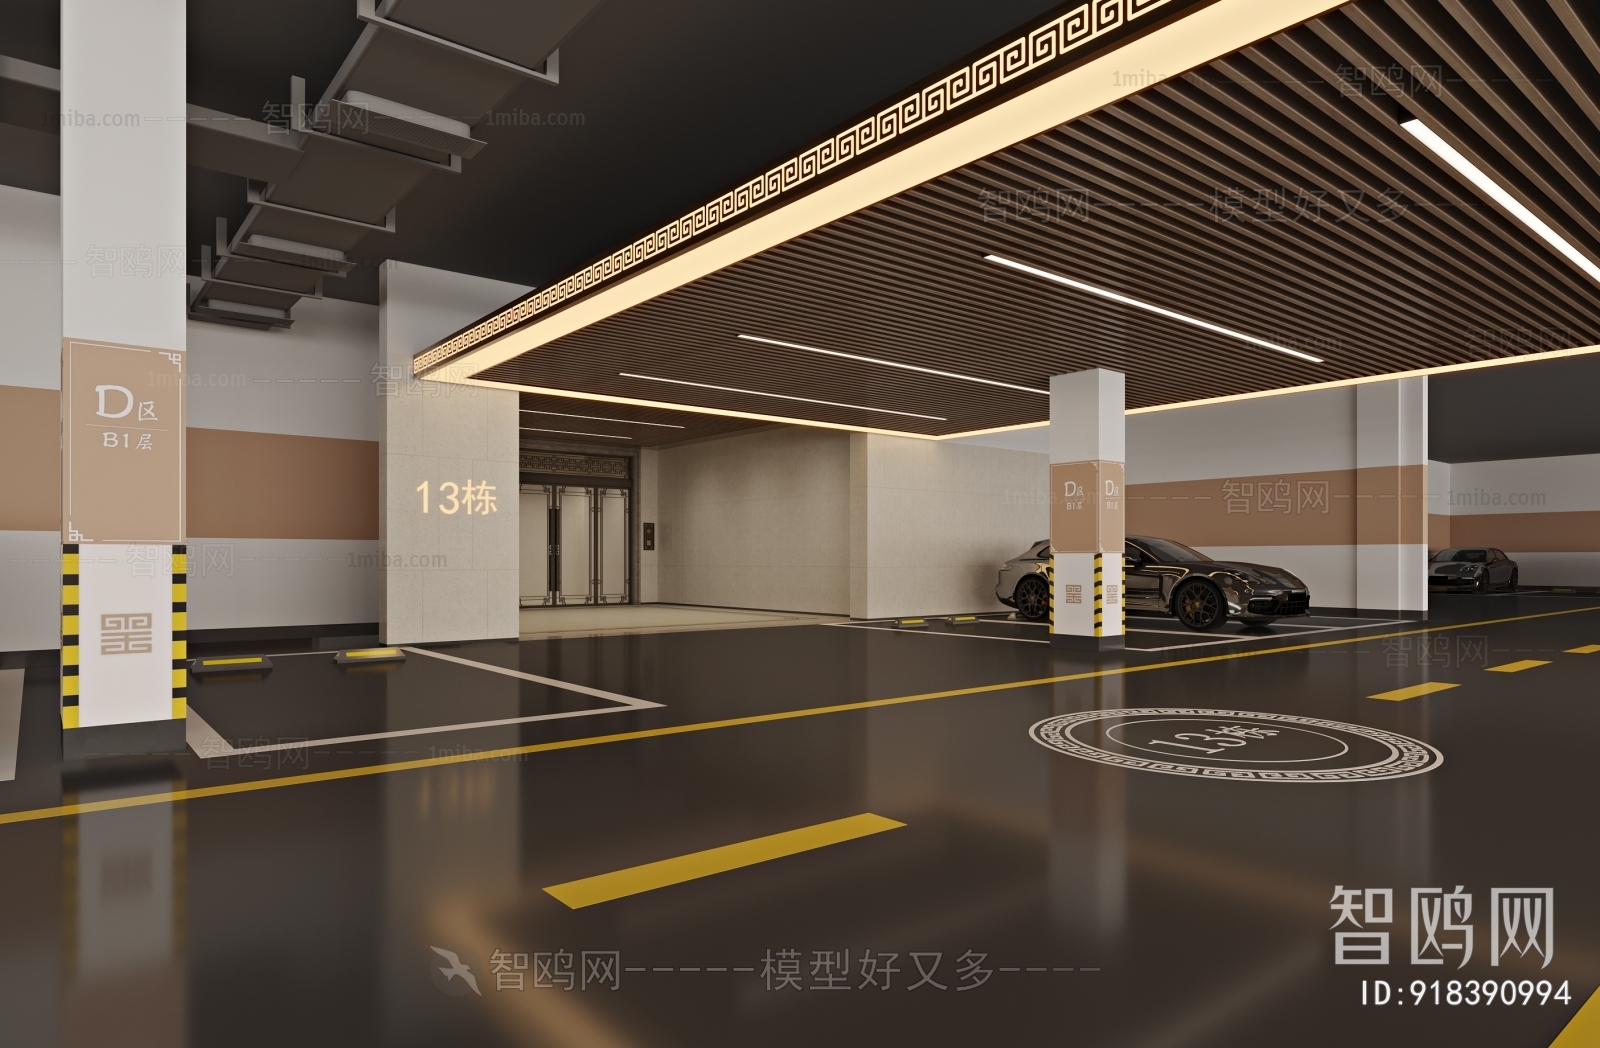 New Chinese Style Underground Parking Lot